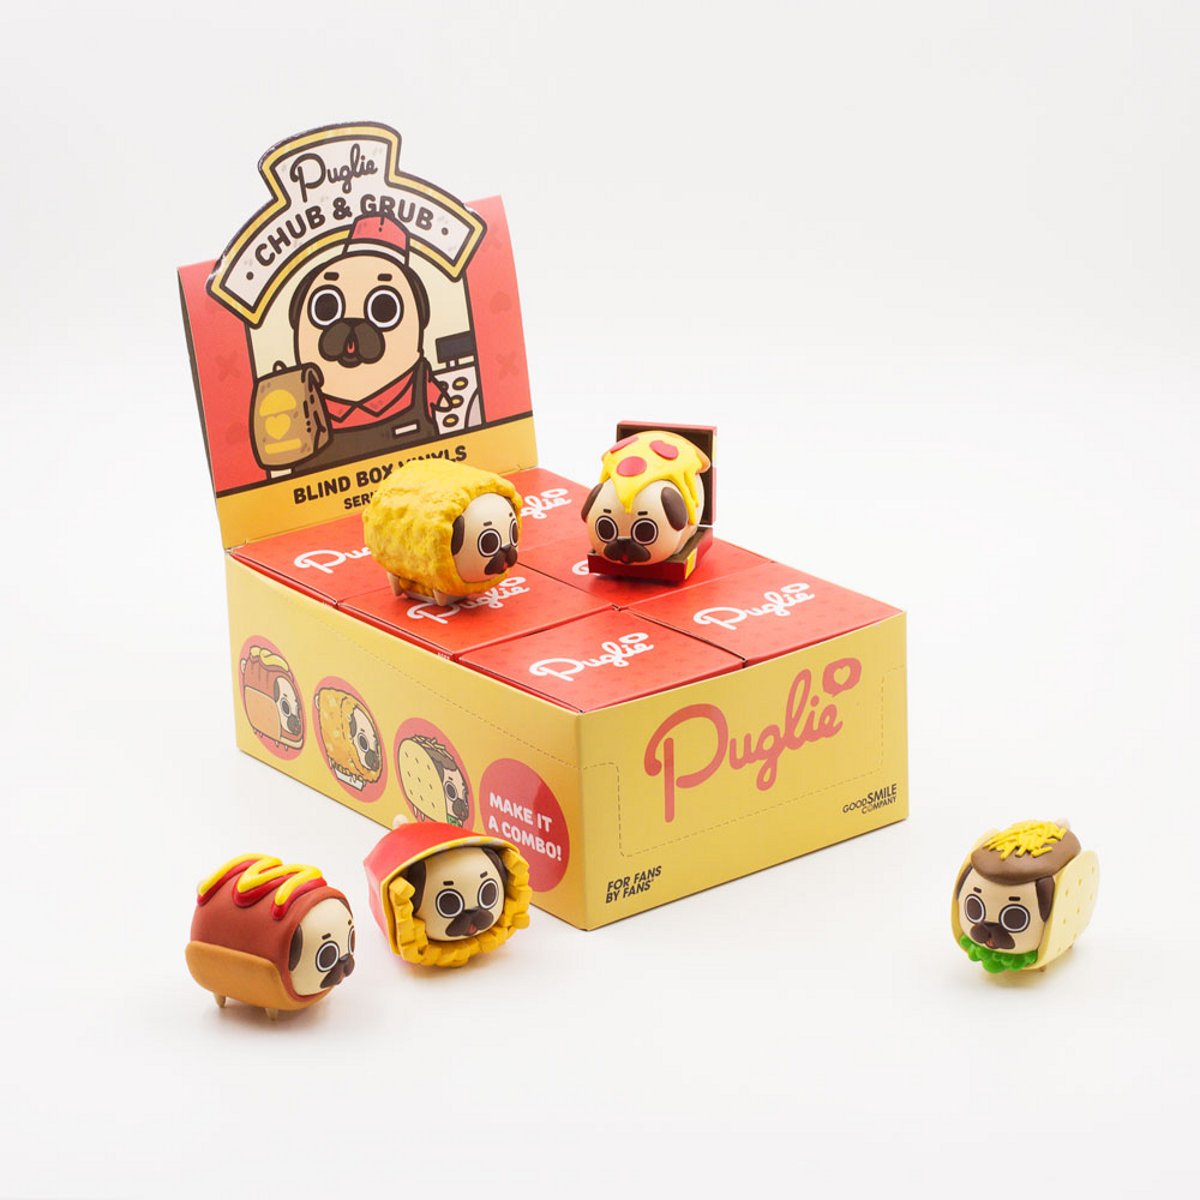 Puglie Chub & Grub Blind Box Vinyl Toys